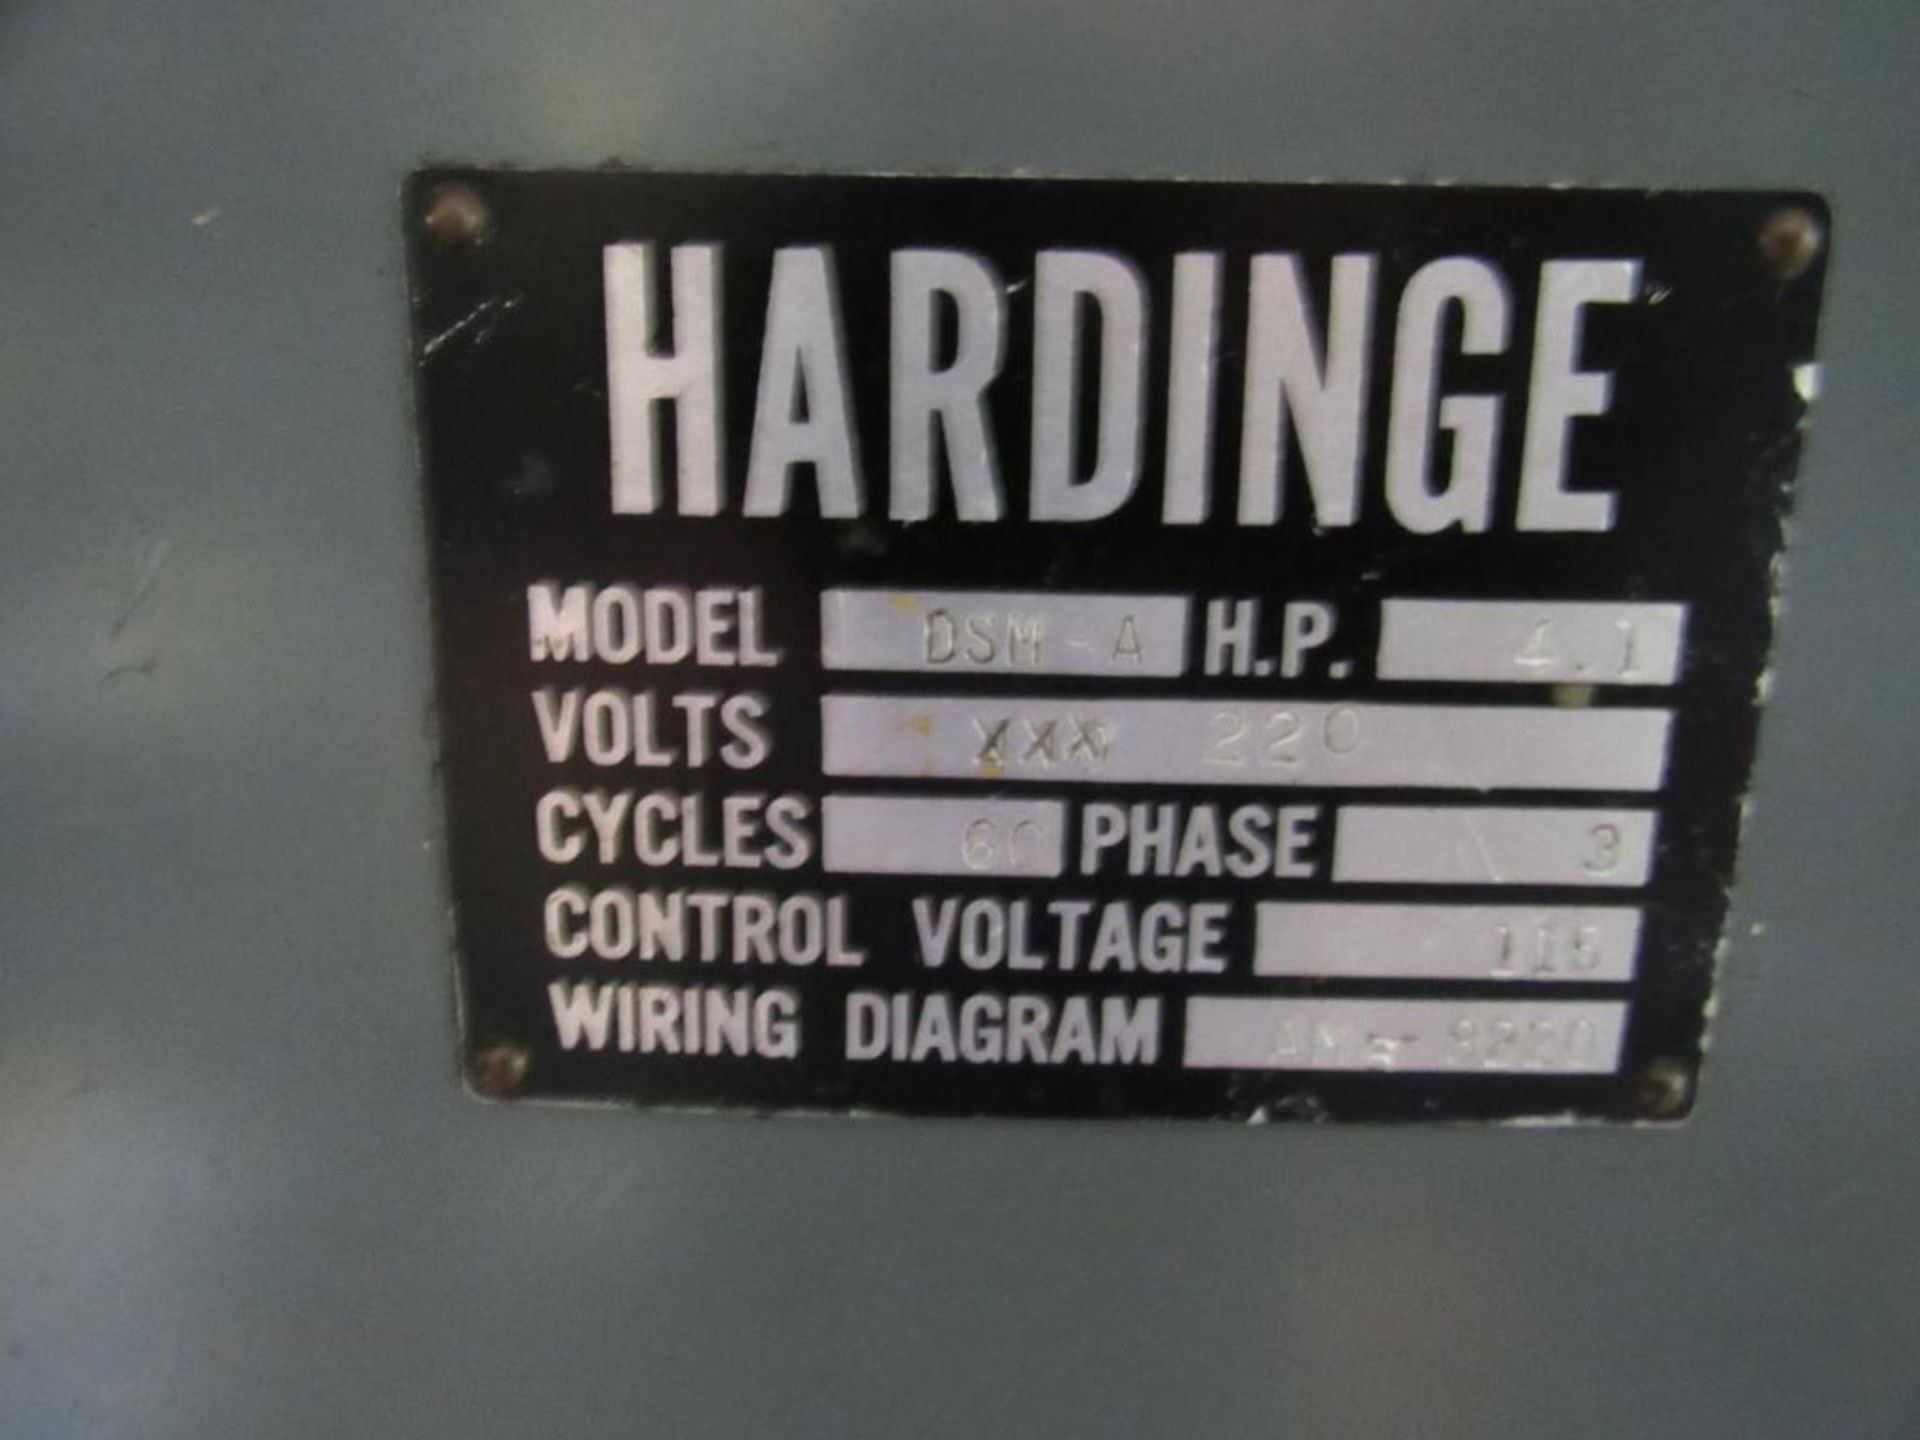 Hardinge Super Precision Bar & Second Operation Machine Model DSM-A, 4.1 HP - Image 7 of 7